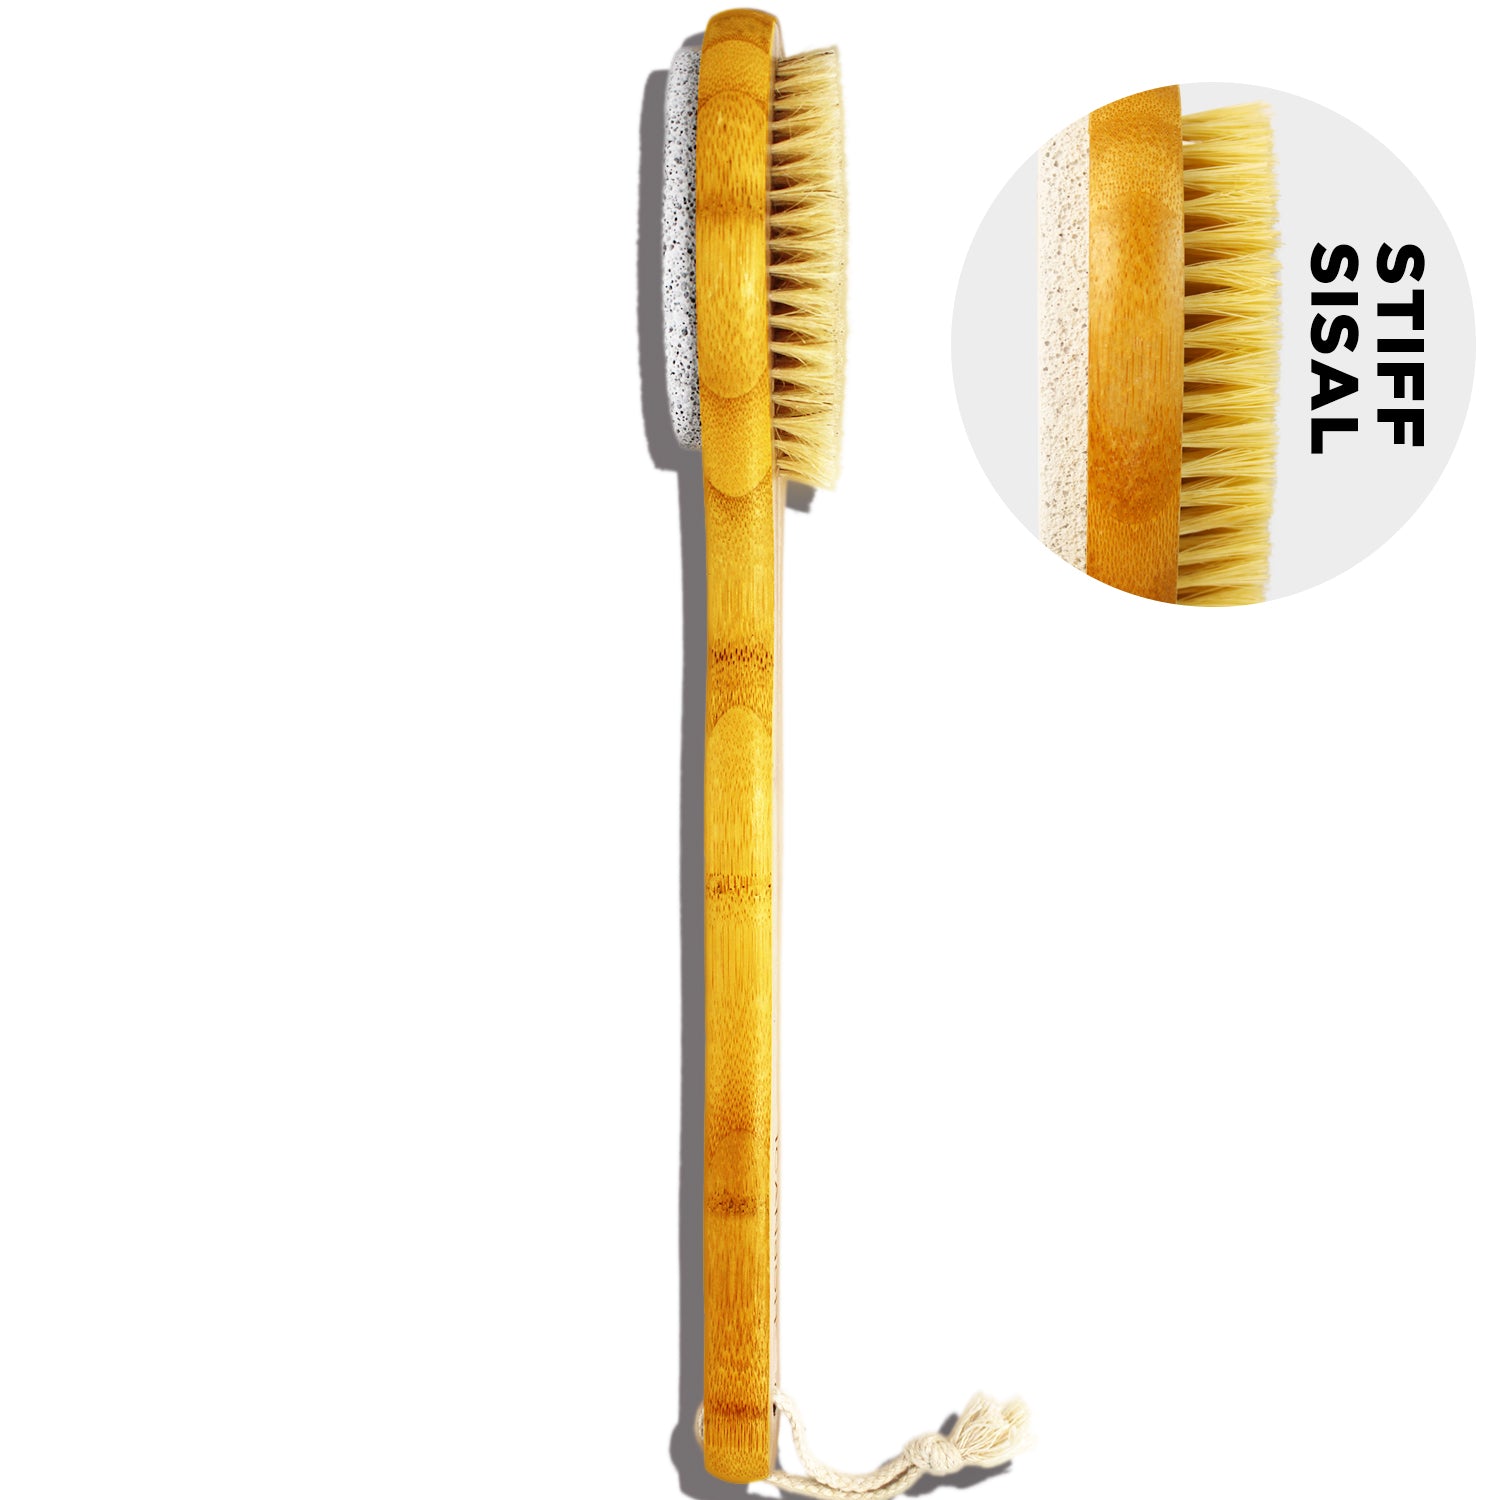 ICANdOIT® Two-sided  Long handle Shower brush | Tampico Fiber Bristles+Pumice Stone